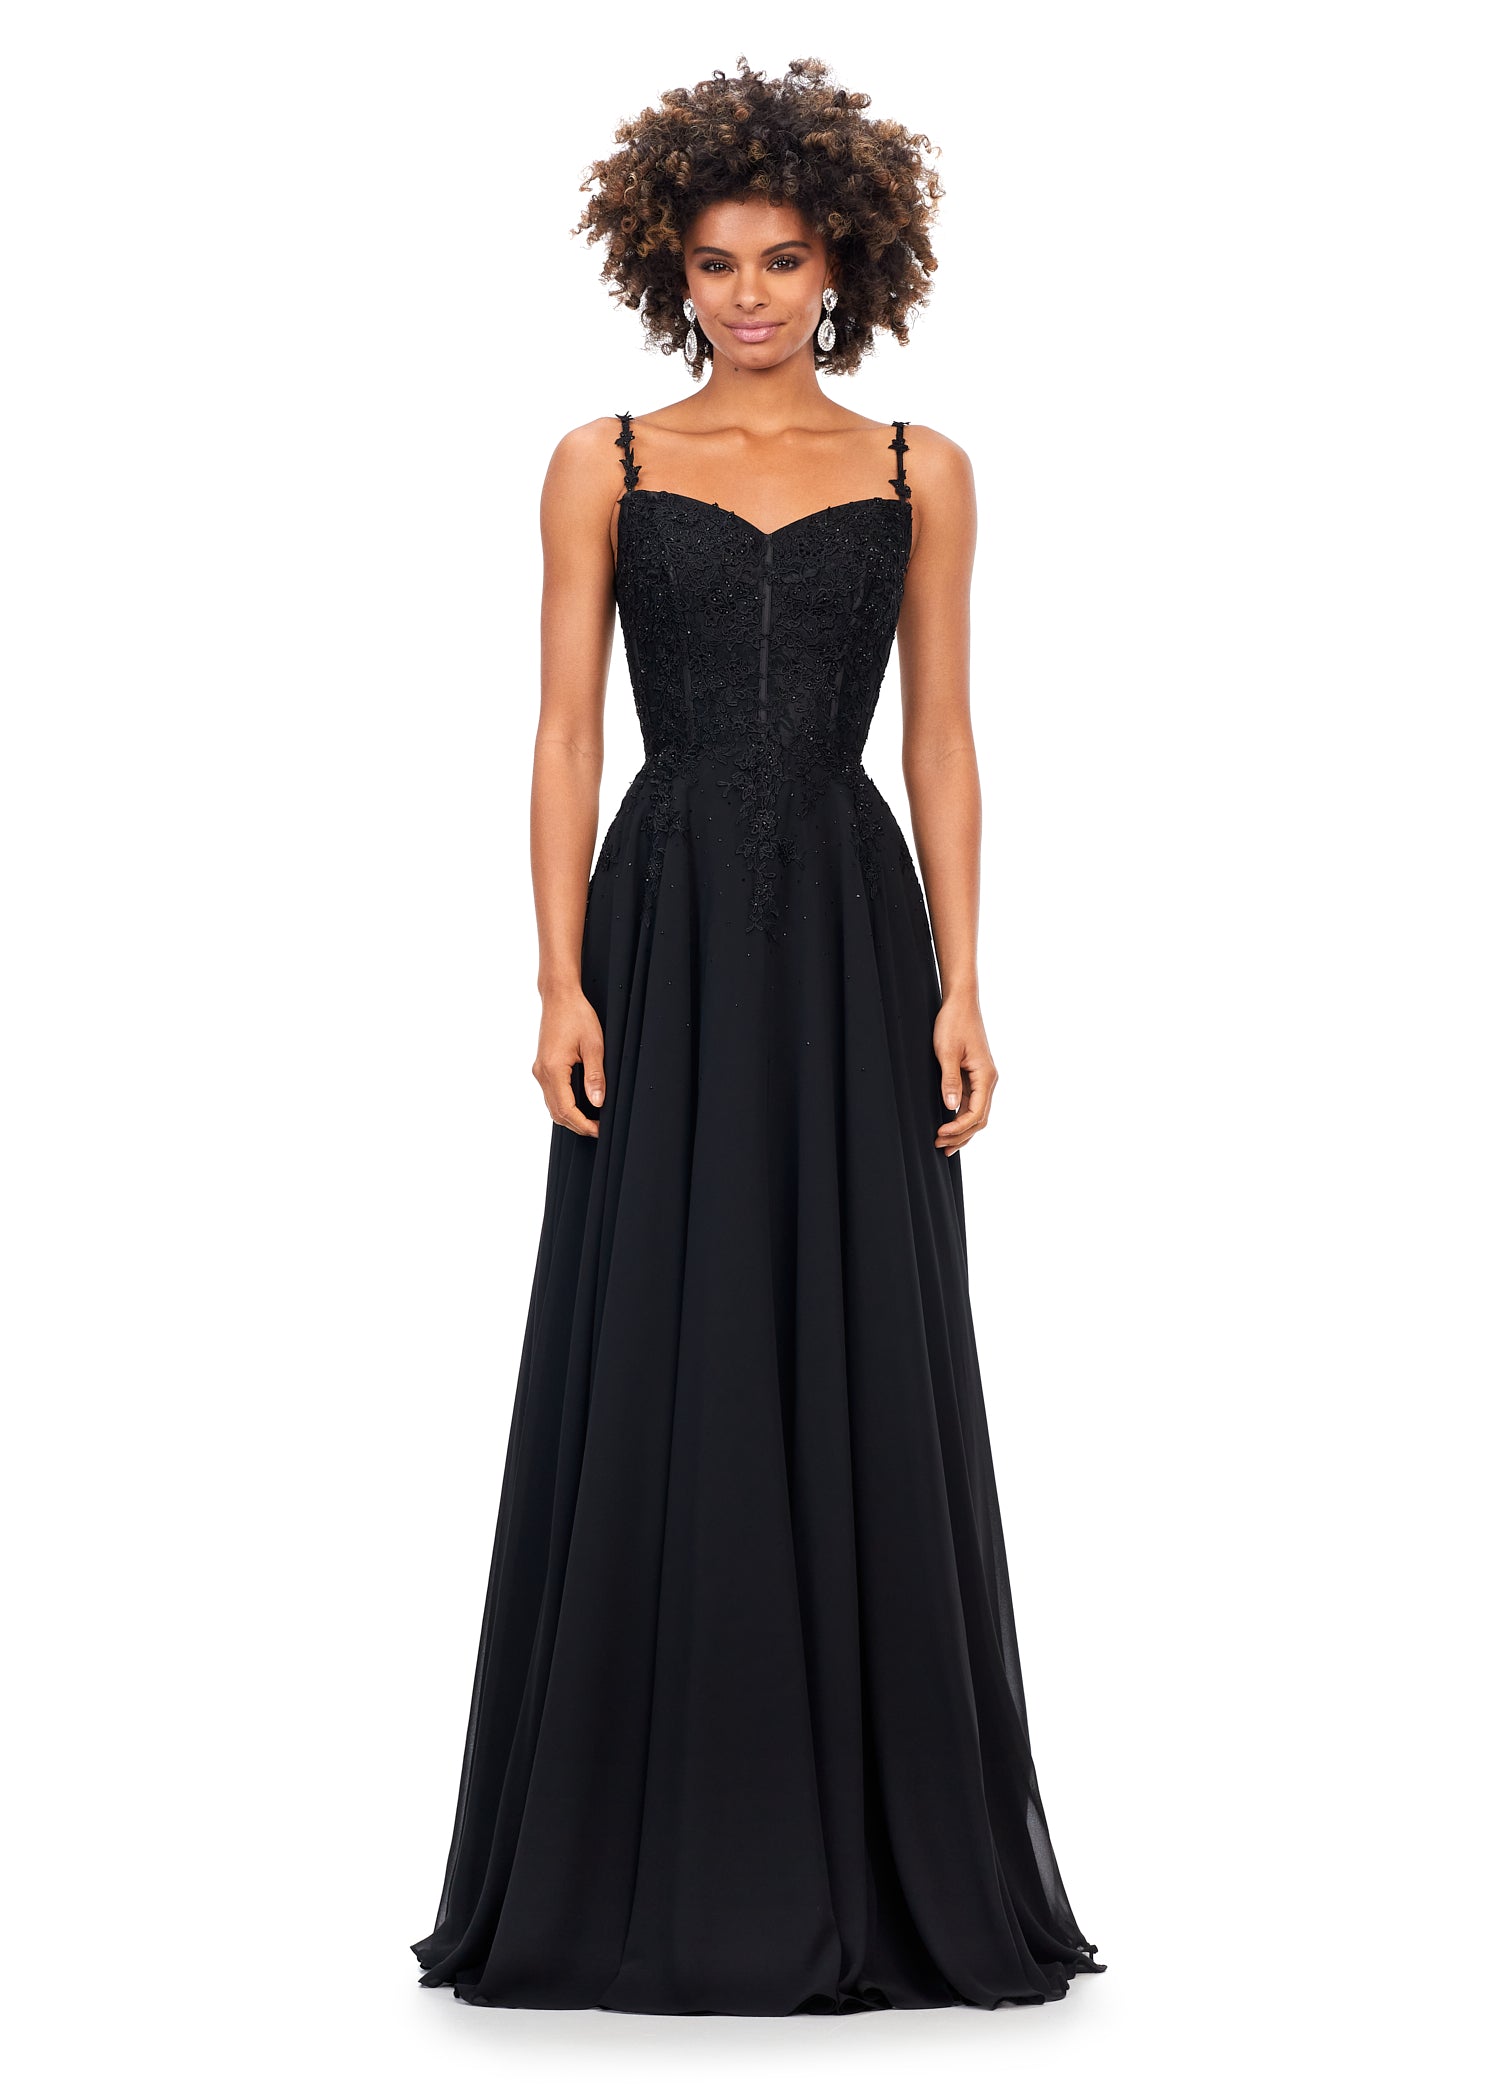 Black Wedding Dresses: 33 Unusual Styles + FAQs